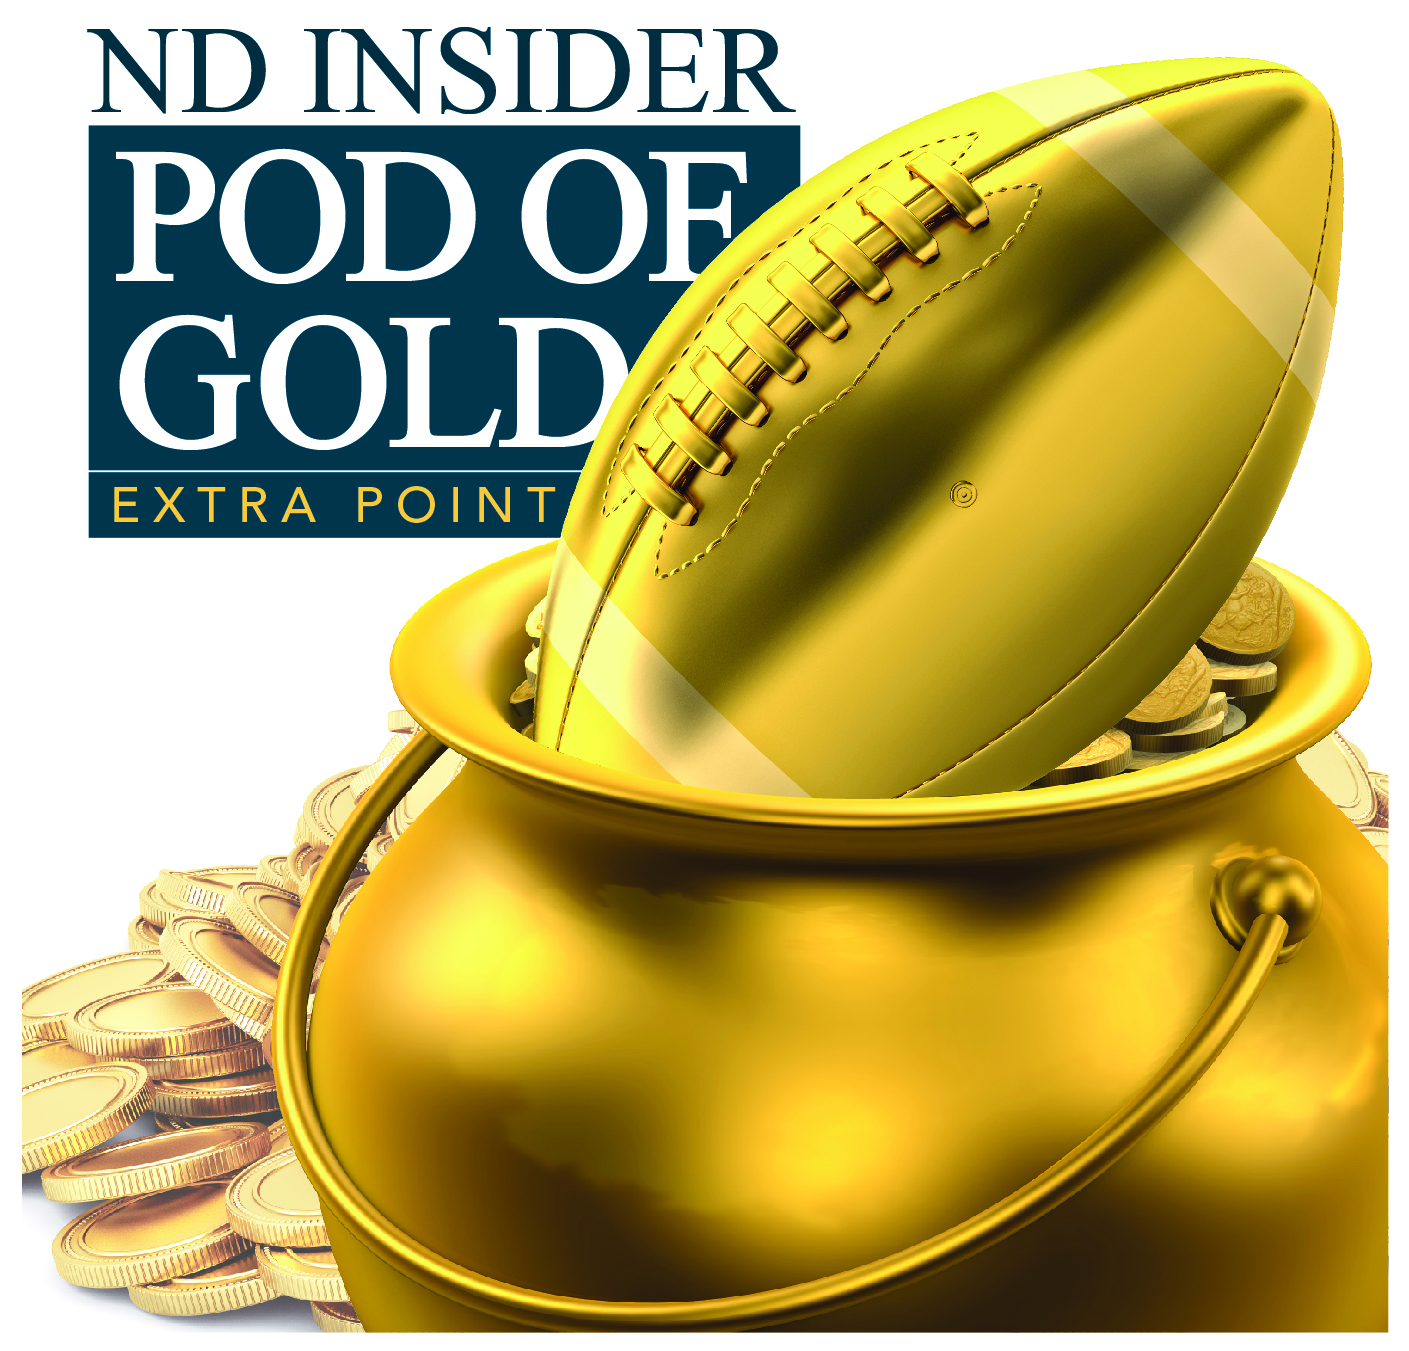 Pod of Gold Extra Point: Notre Dame vs. Alabama recap